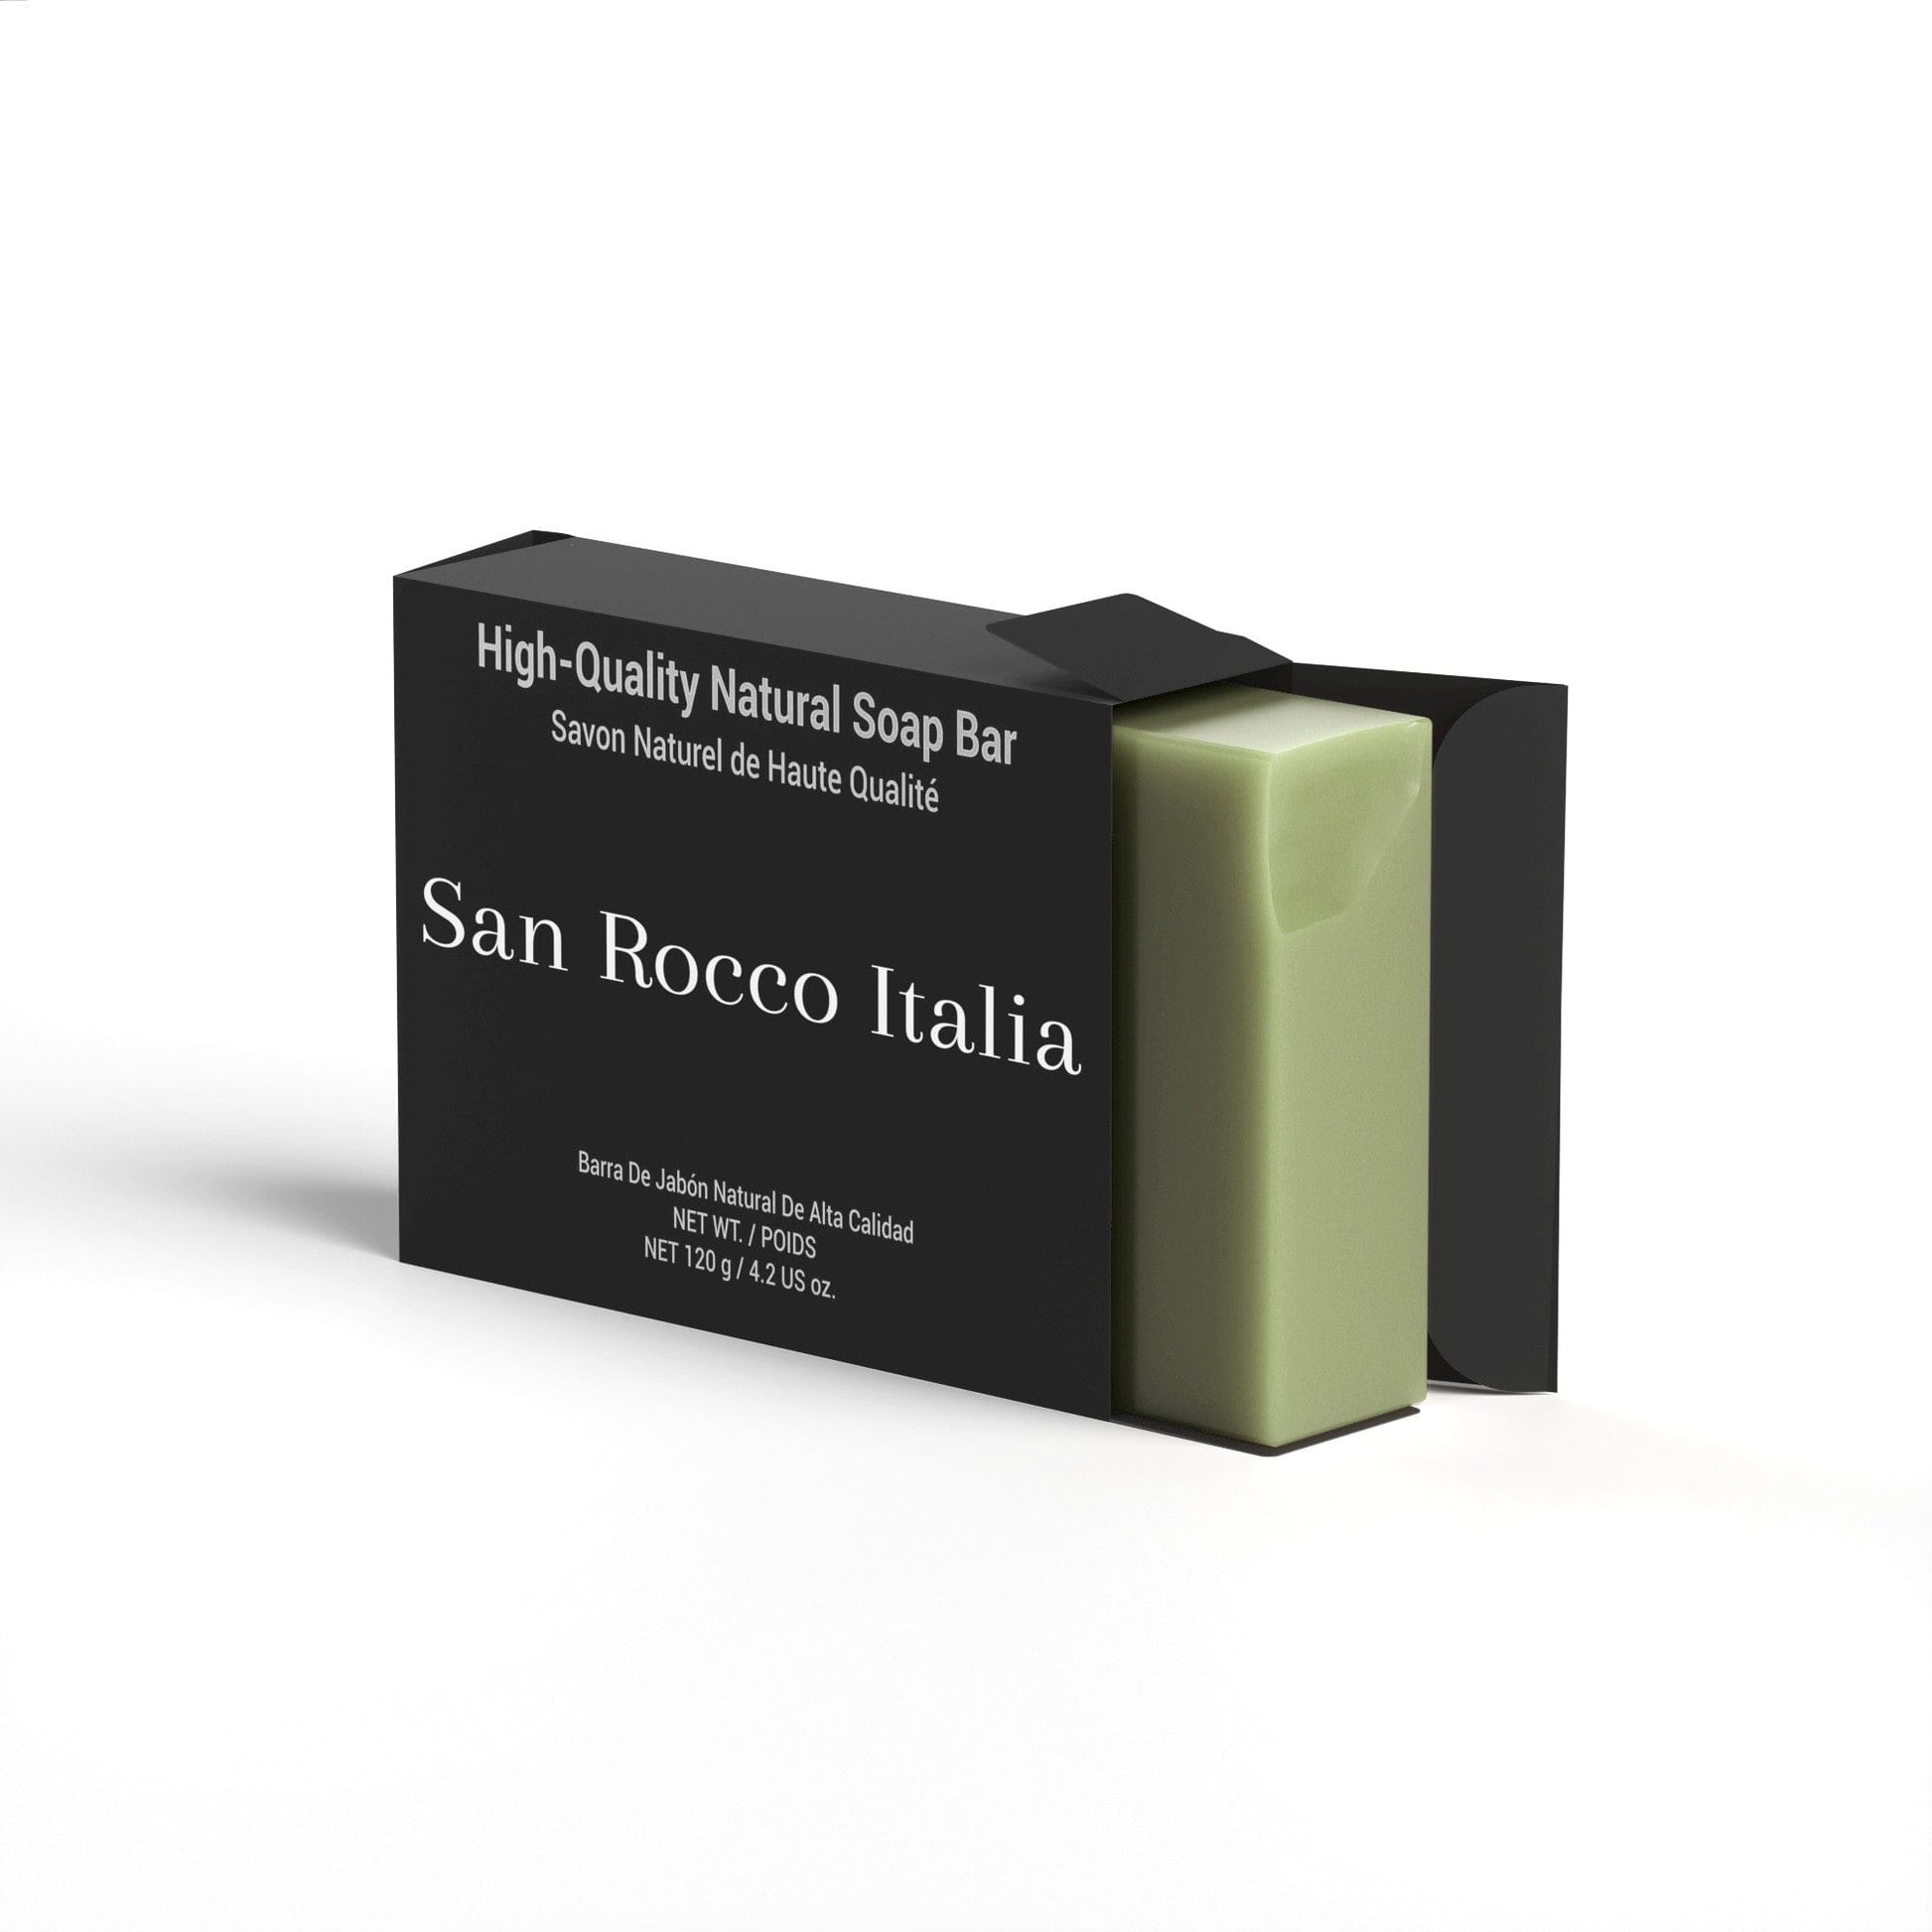 Organic Neem Oil and Basil Exfoliating Soap Bar - Premium soap-basil - Just €12.95! Shop now at San Rocco Italia